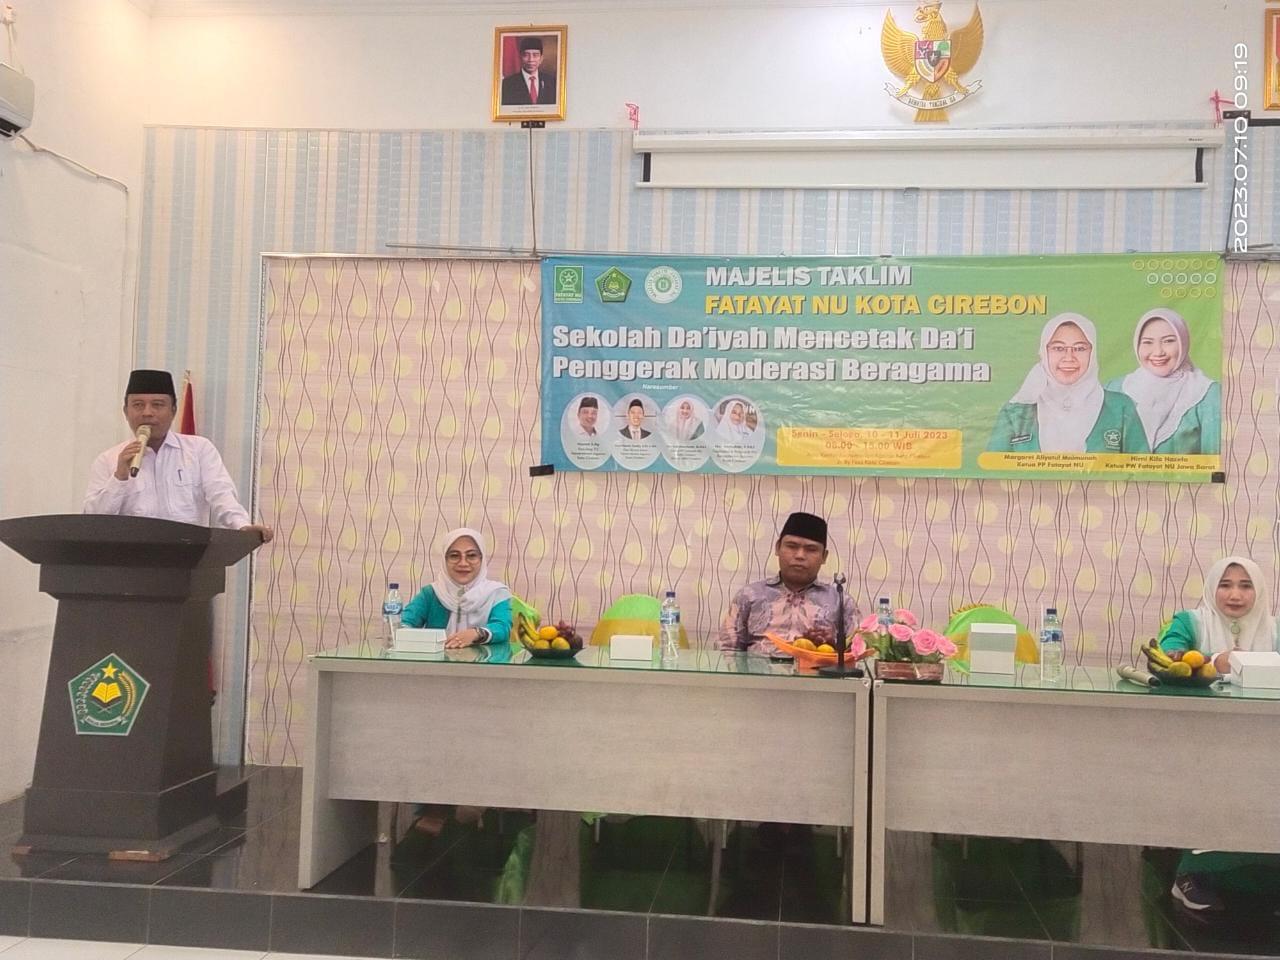 PC Fatayat NU Kota Cirebon Gelar Sekolah Daiyah 